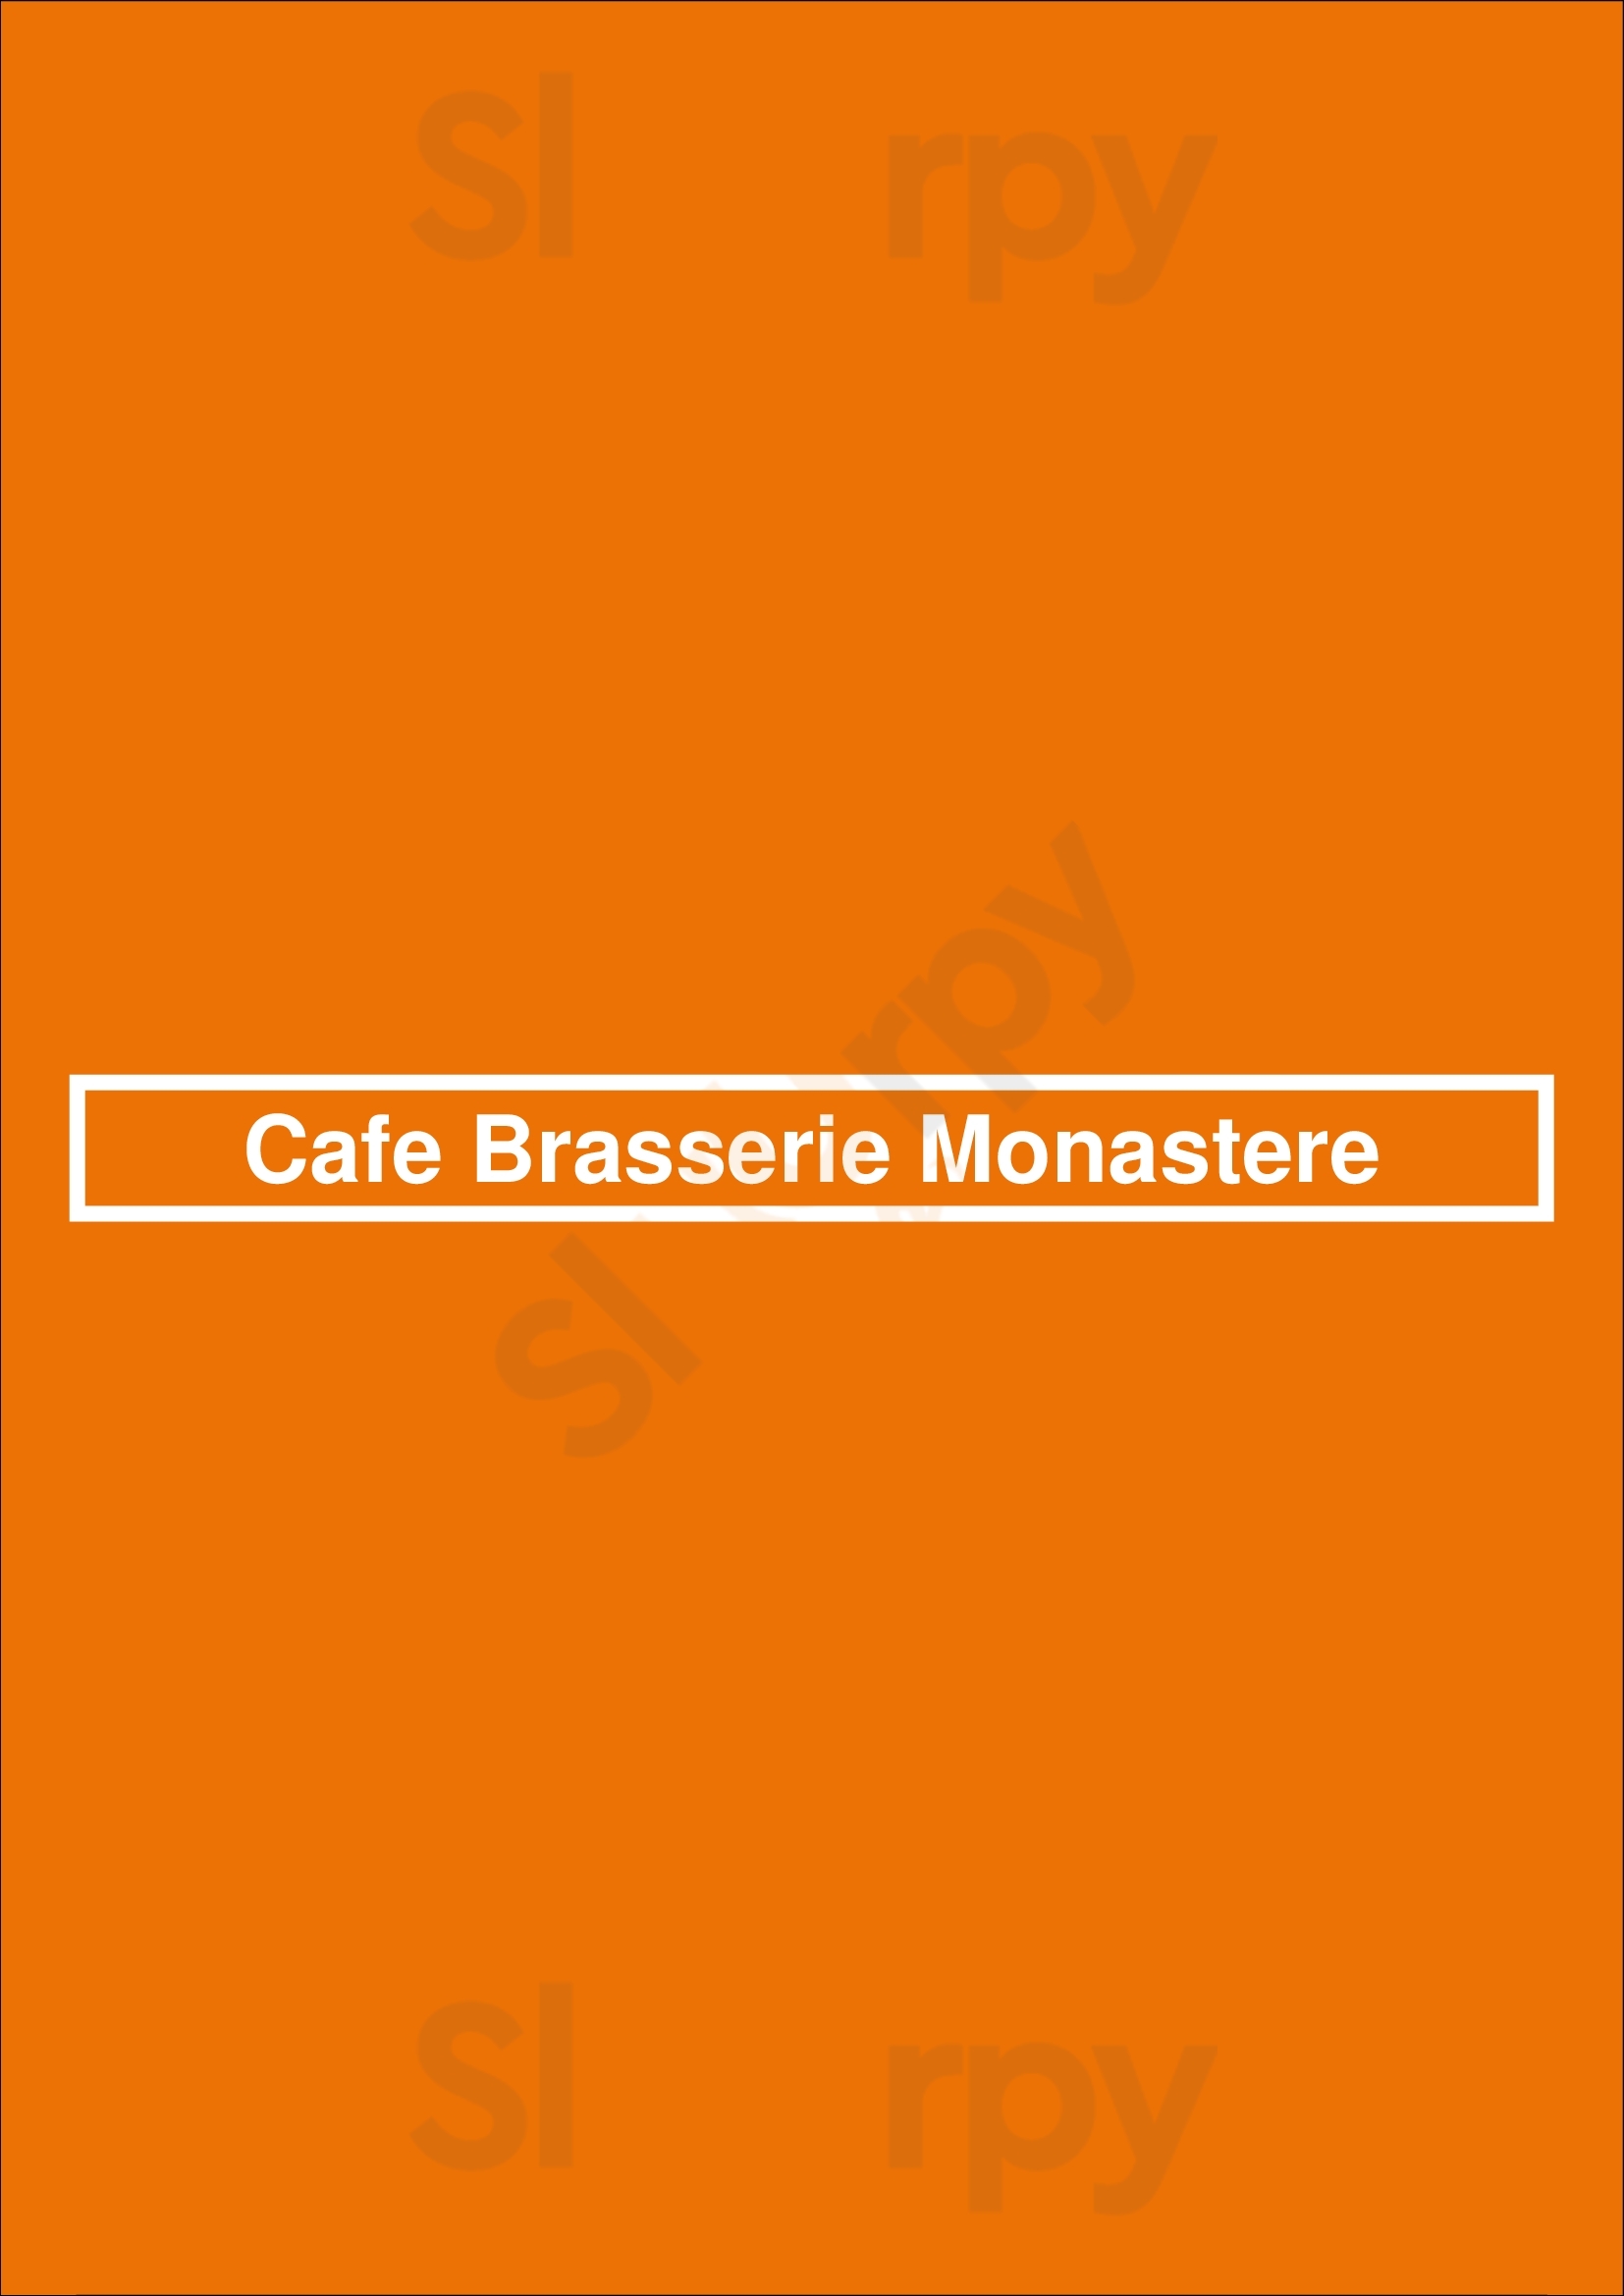 Cafe Brasserie Monastere Delft Menu - 1